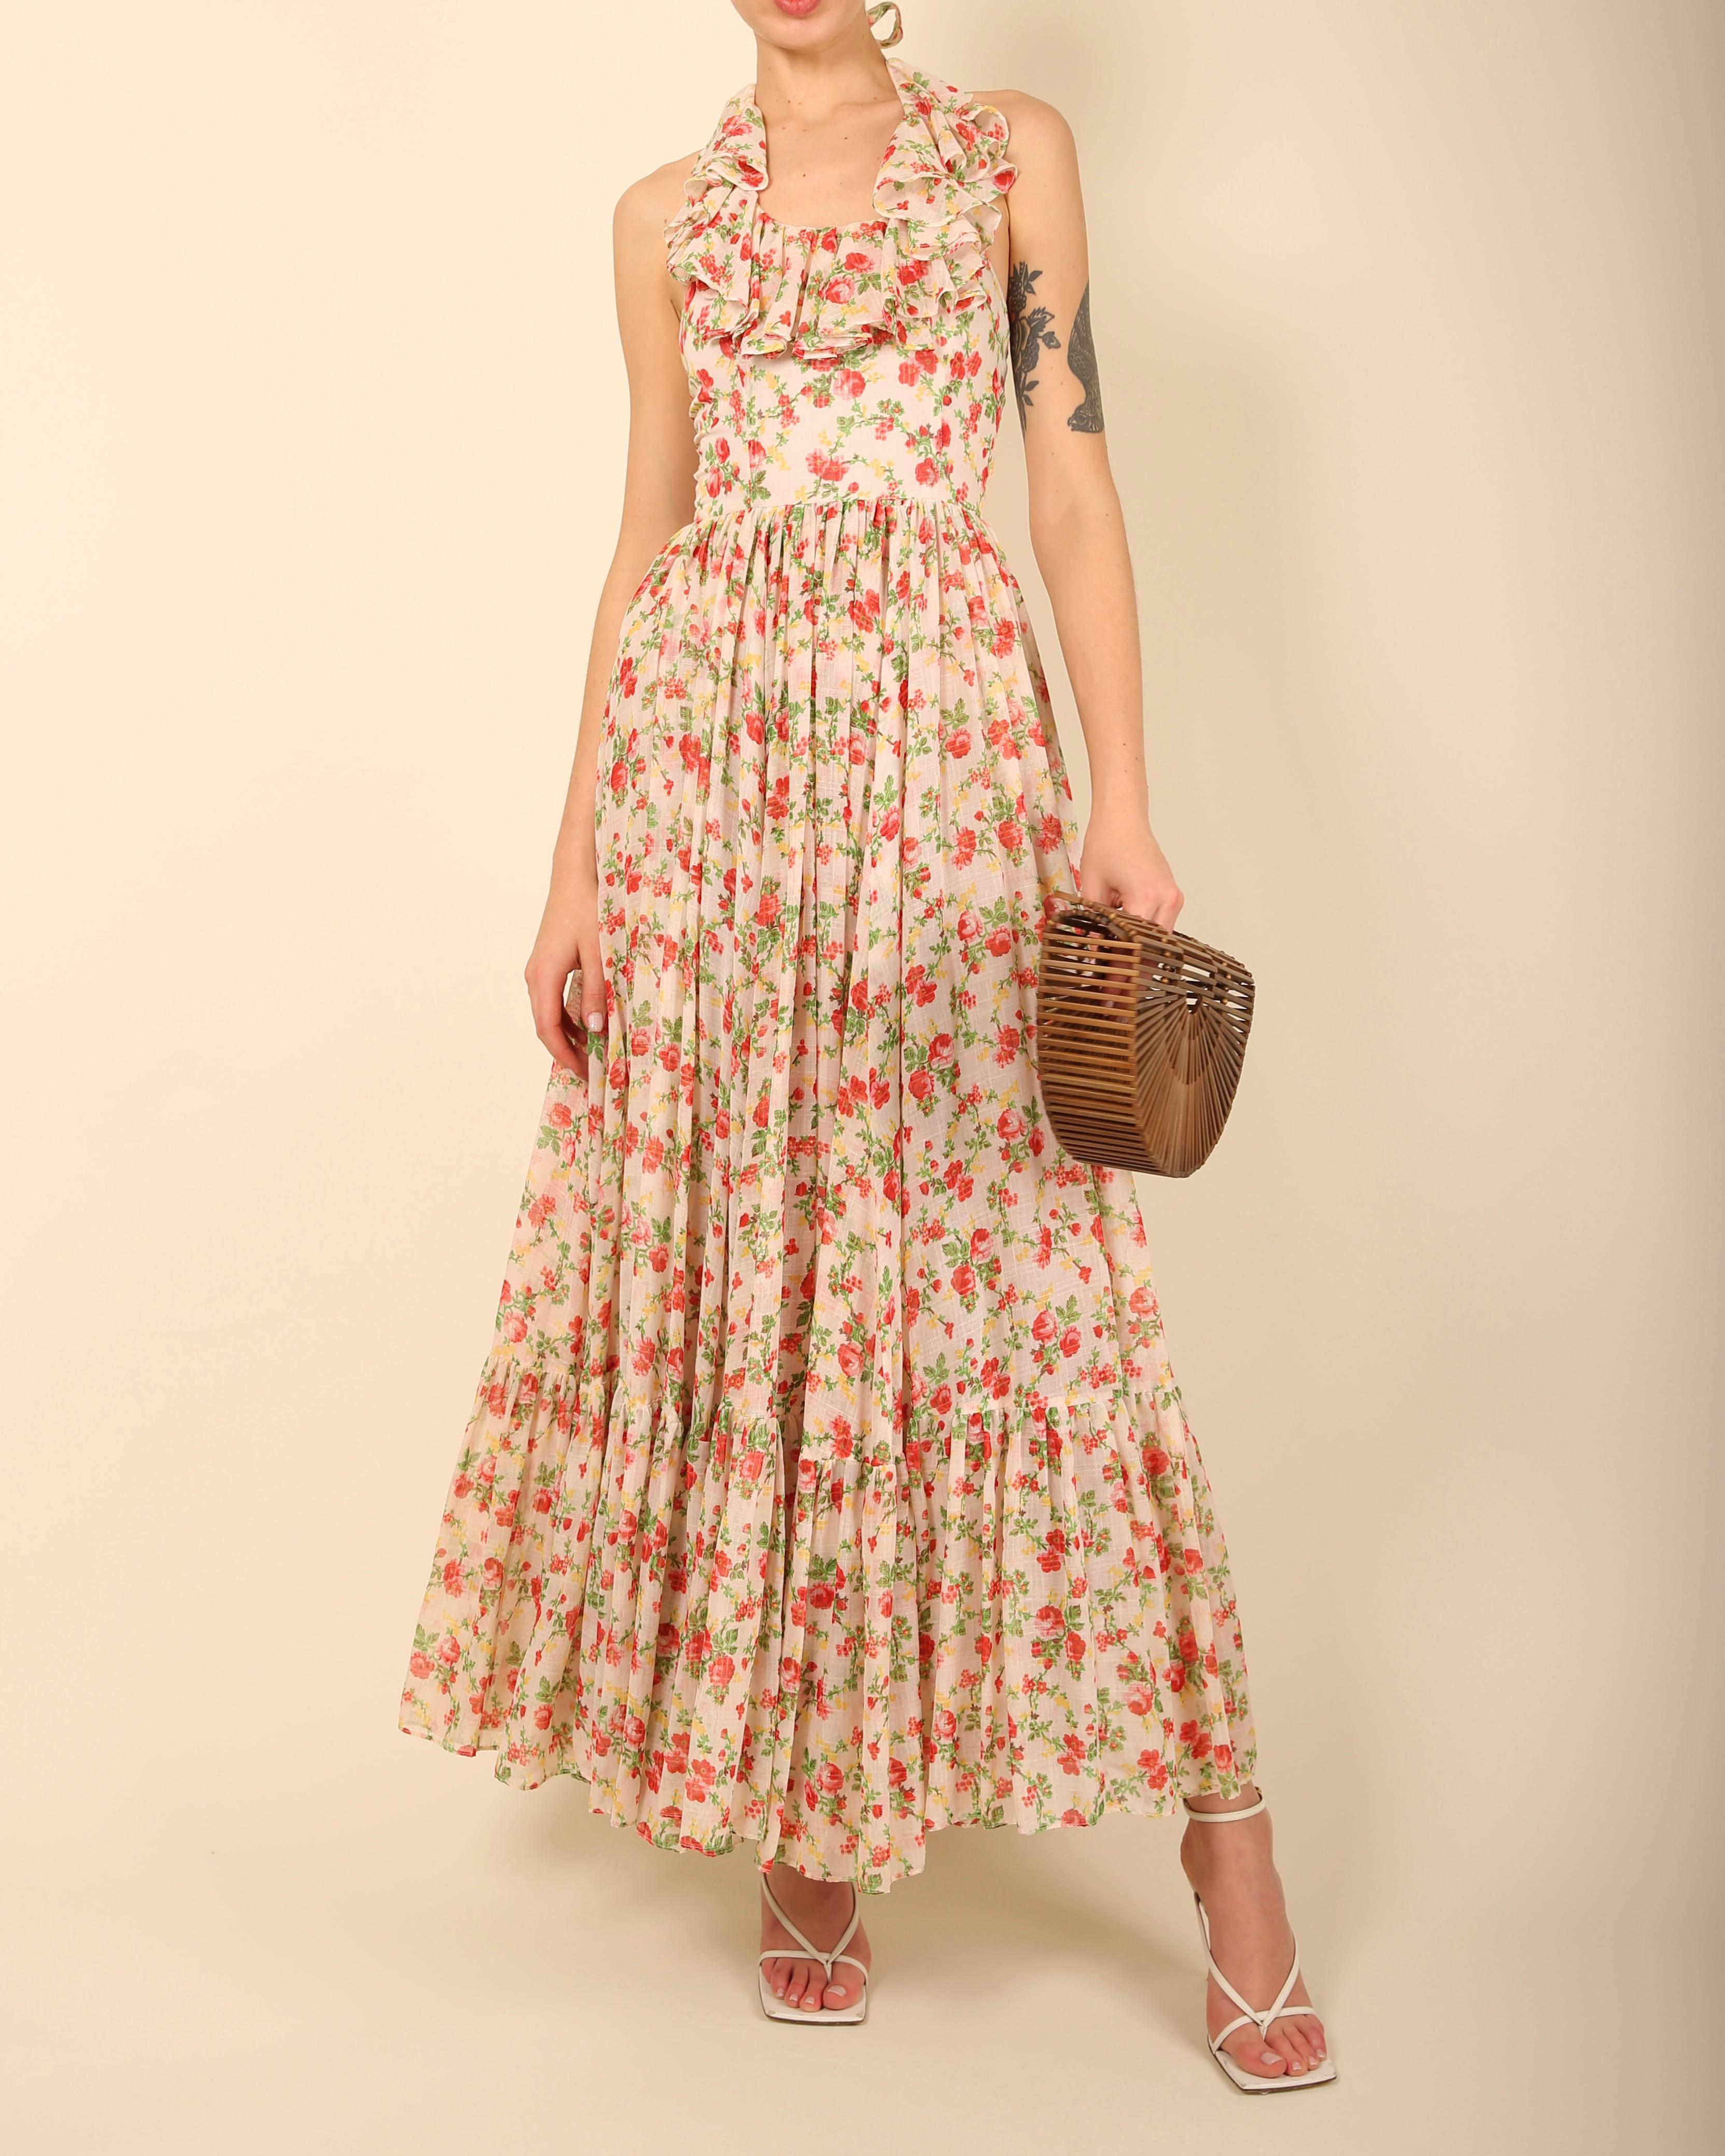 Vintage cottagecore prairie cotton white red floral print halter backless dress For Sale 5